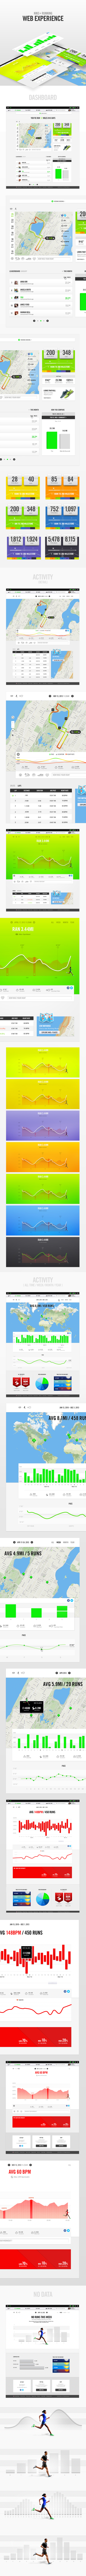 Nike Nike+ activity running Web tracking steve winchell gps sportwatch digital interactive design Website module